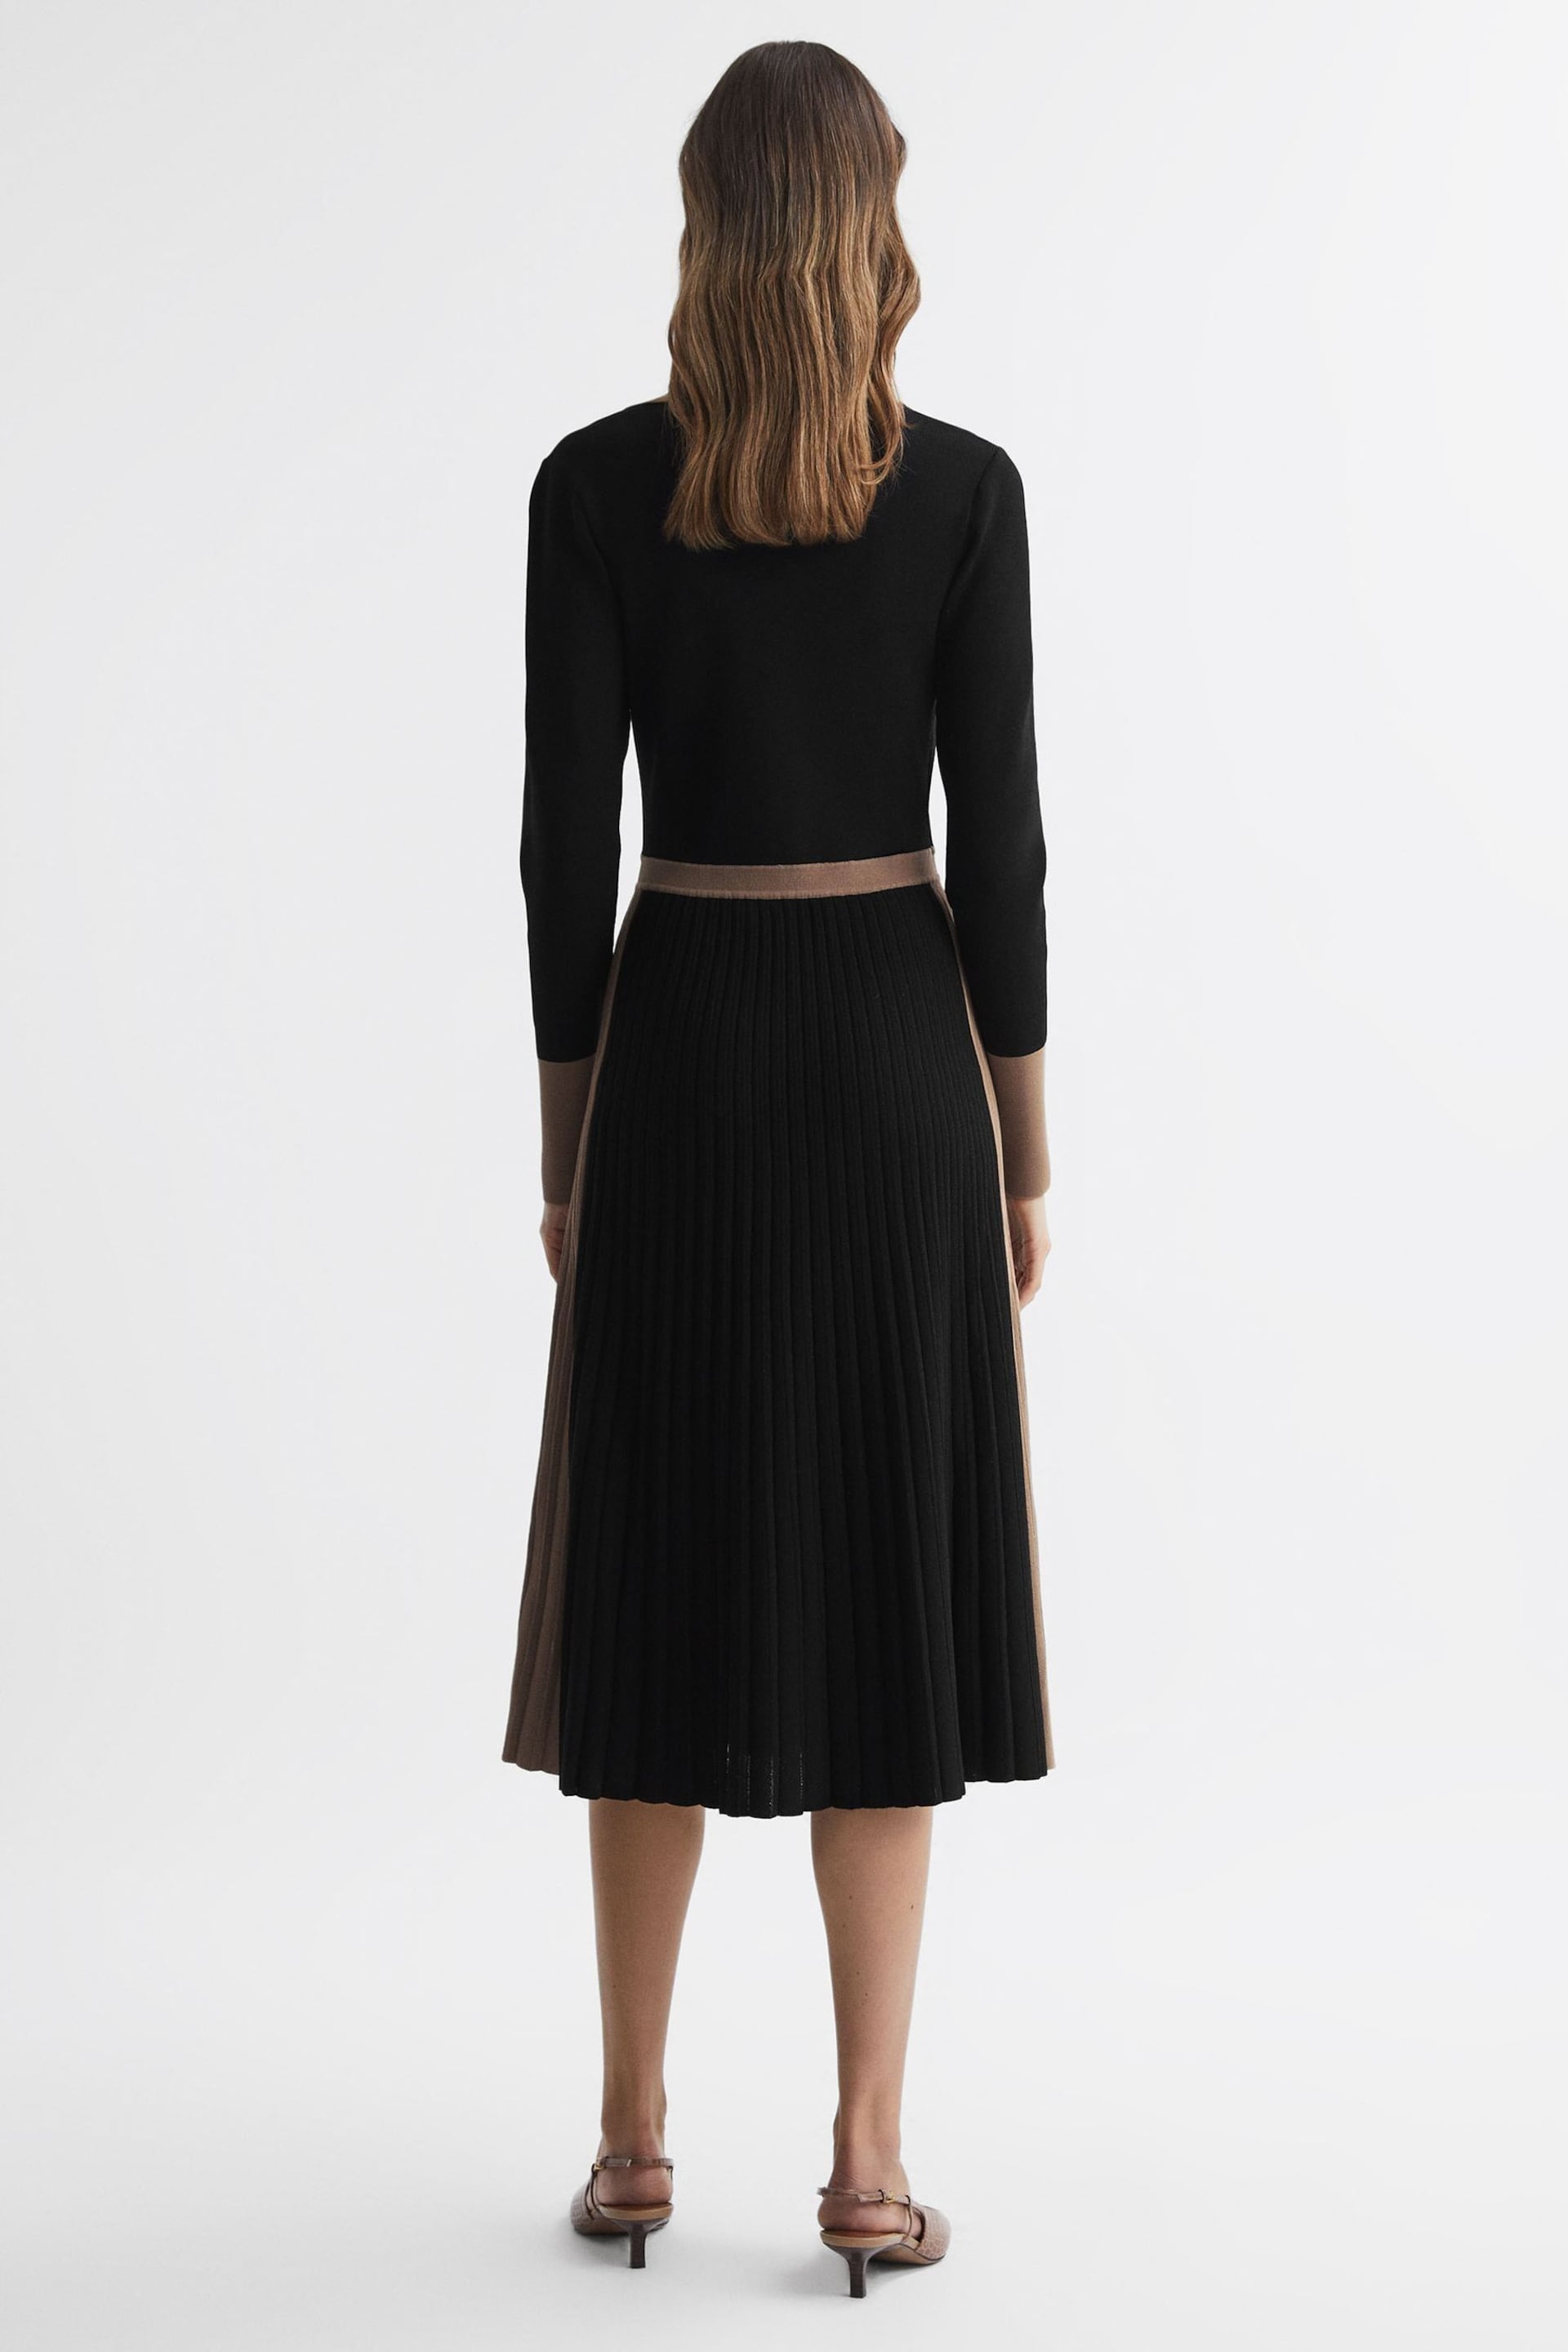 Reiss Black/Camel Mia Knitted Colourblock Pleated Midi Dress - Image 4 of 4